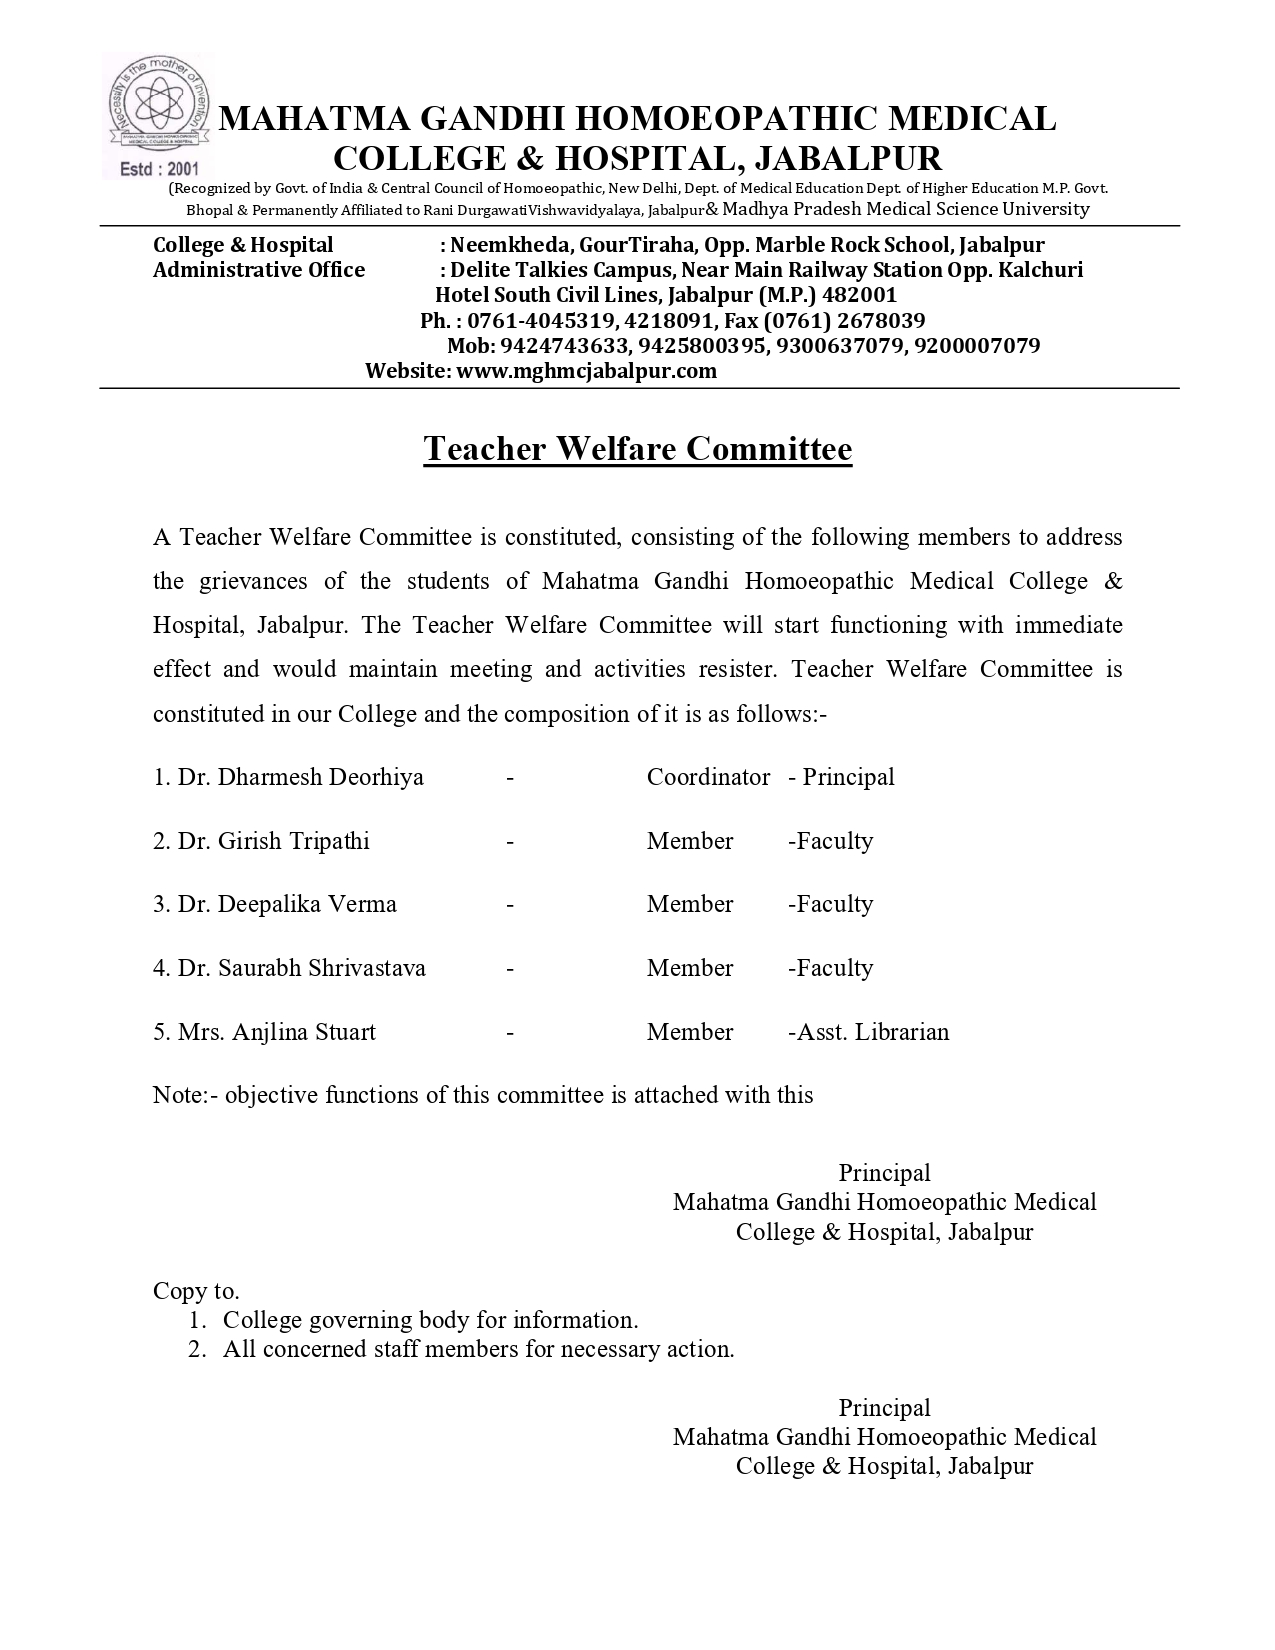 Mahatma Gandhi Homoeopathic Medical College & Hospital Teacher Welfare Committee